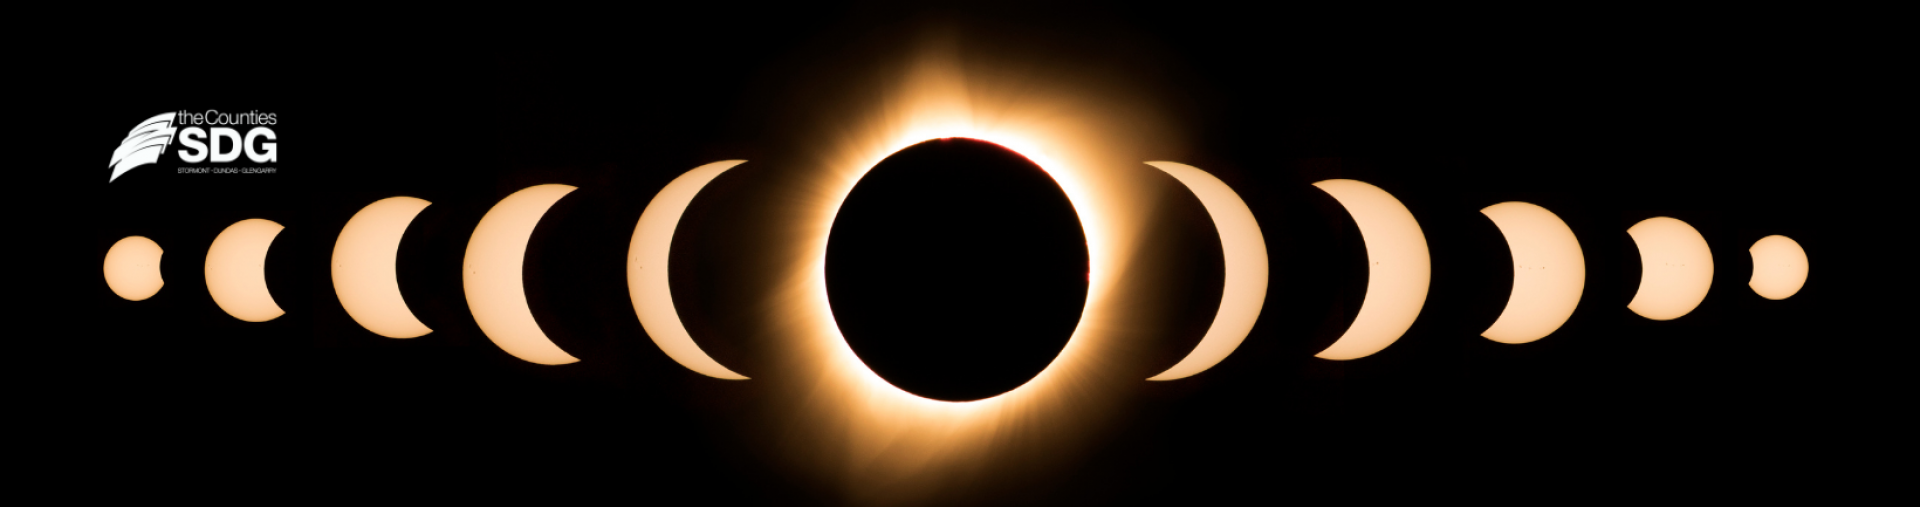 Eclipse panorama